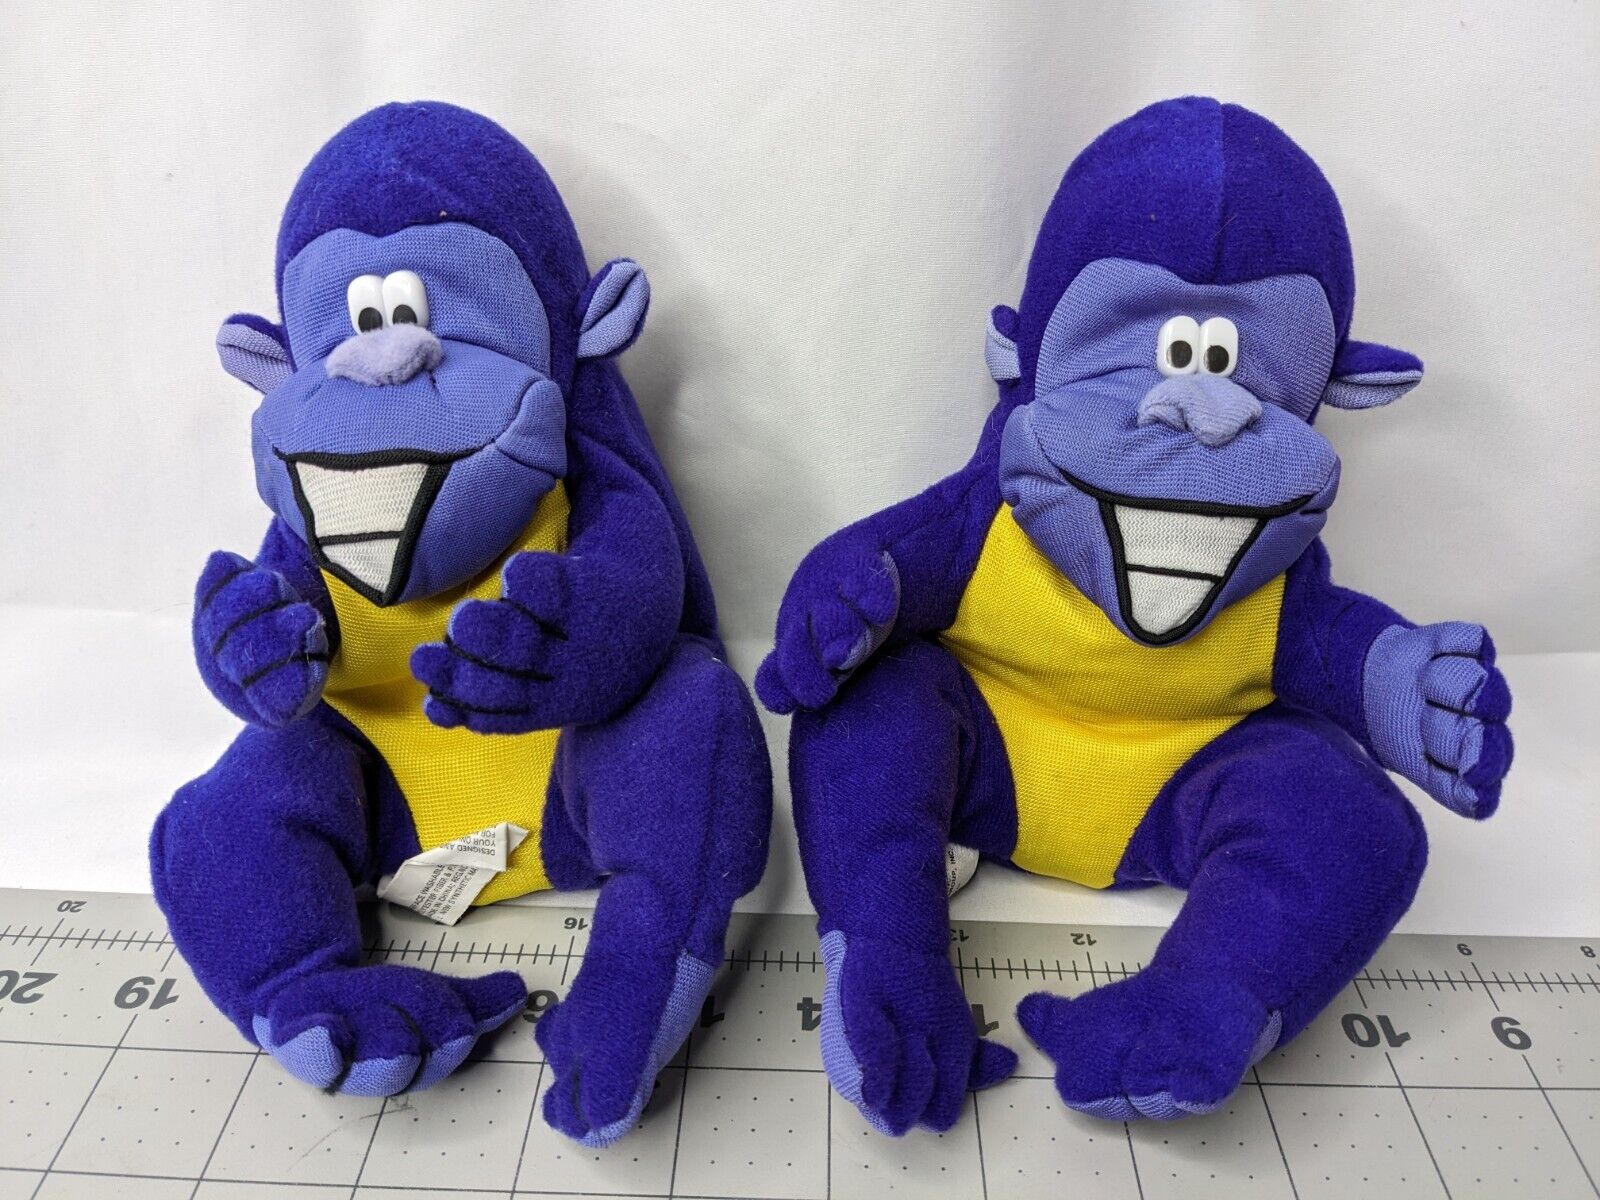 ZYRTEC Purple Plush Gorilla Drug Rep Pharma Lot of 2 Stuffed Animal Toy